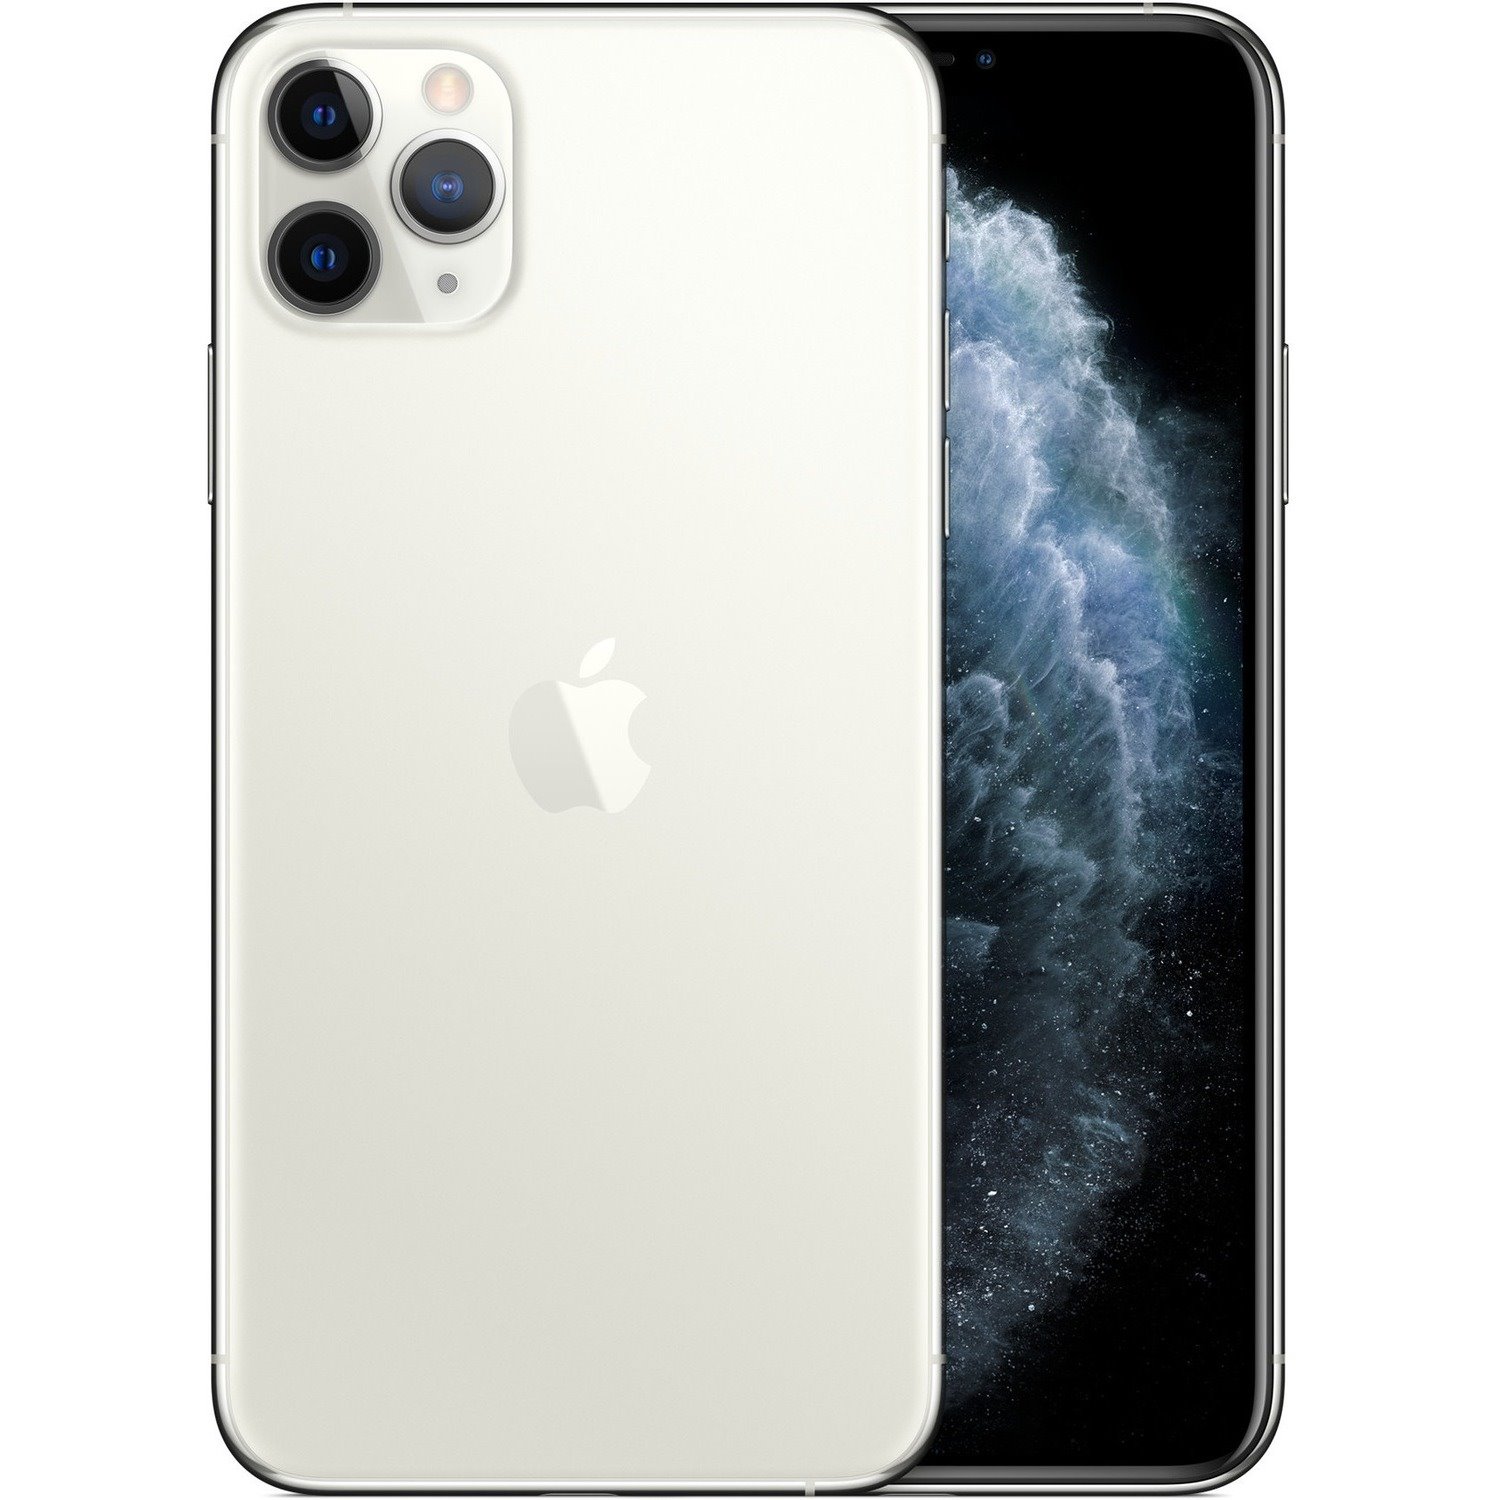 Apple iPhone 11 Pro A2160 256 GB Smartphone - 5.8" OLED 2436 x 1125 - 4 GB RAM - iOS 13 - 4G - Silver